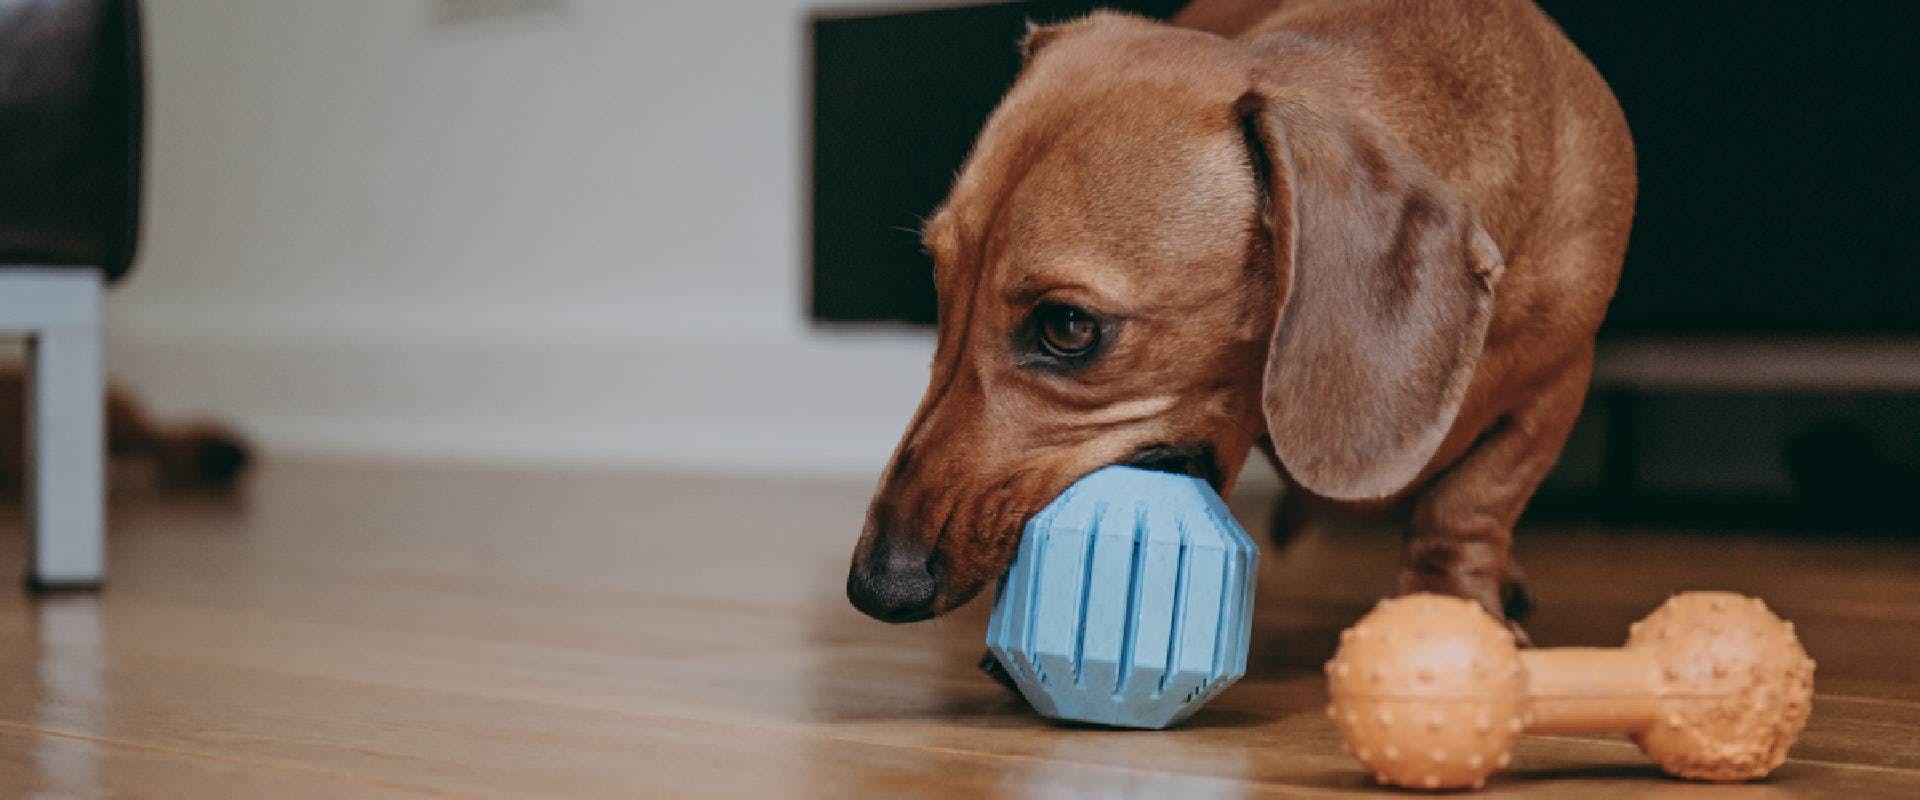 Dachshund playing with a stimulating dog toy